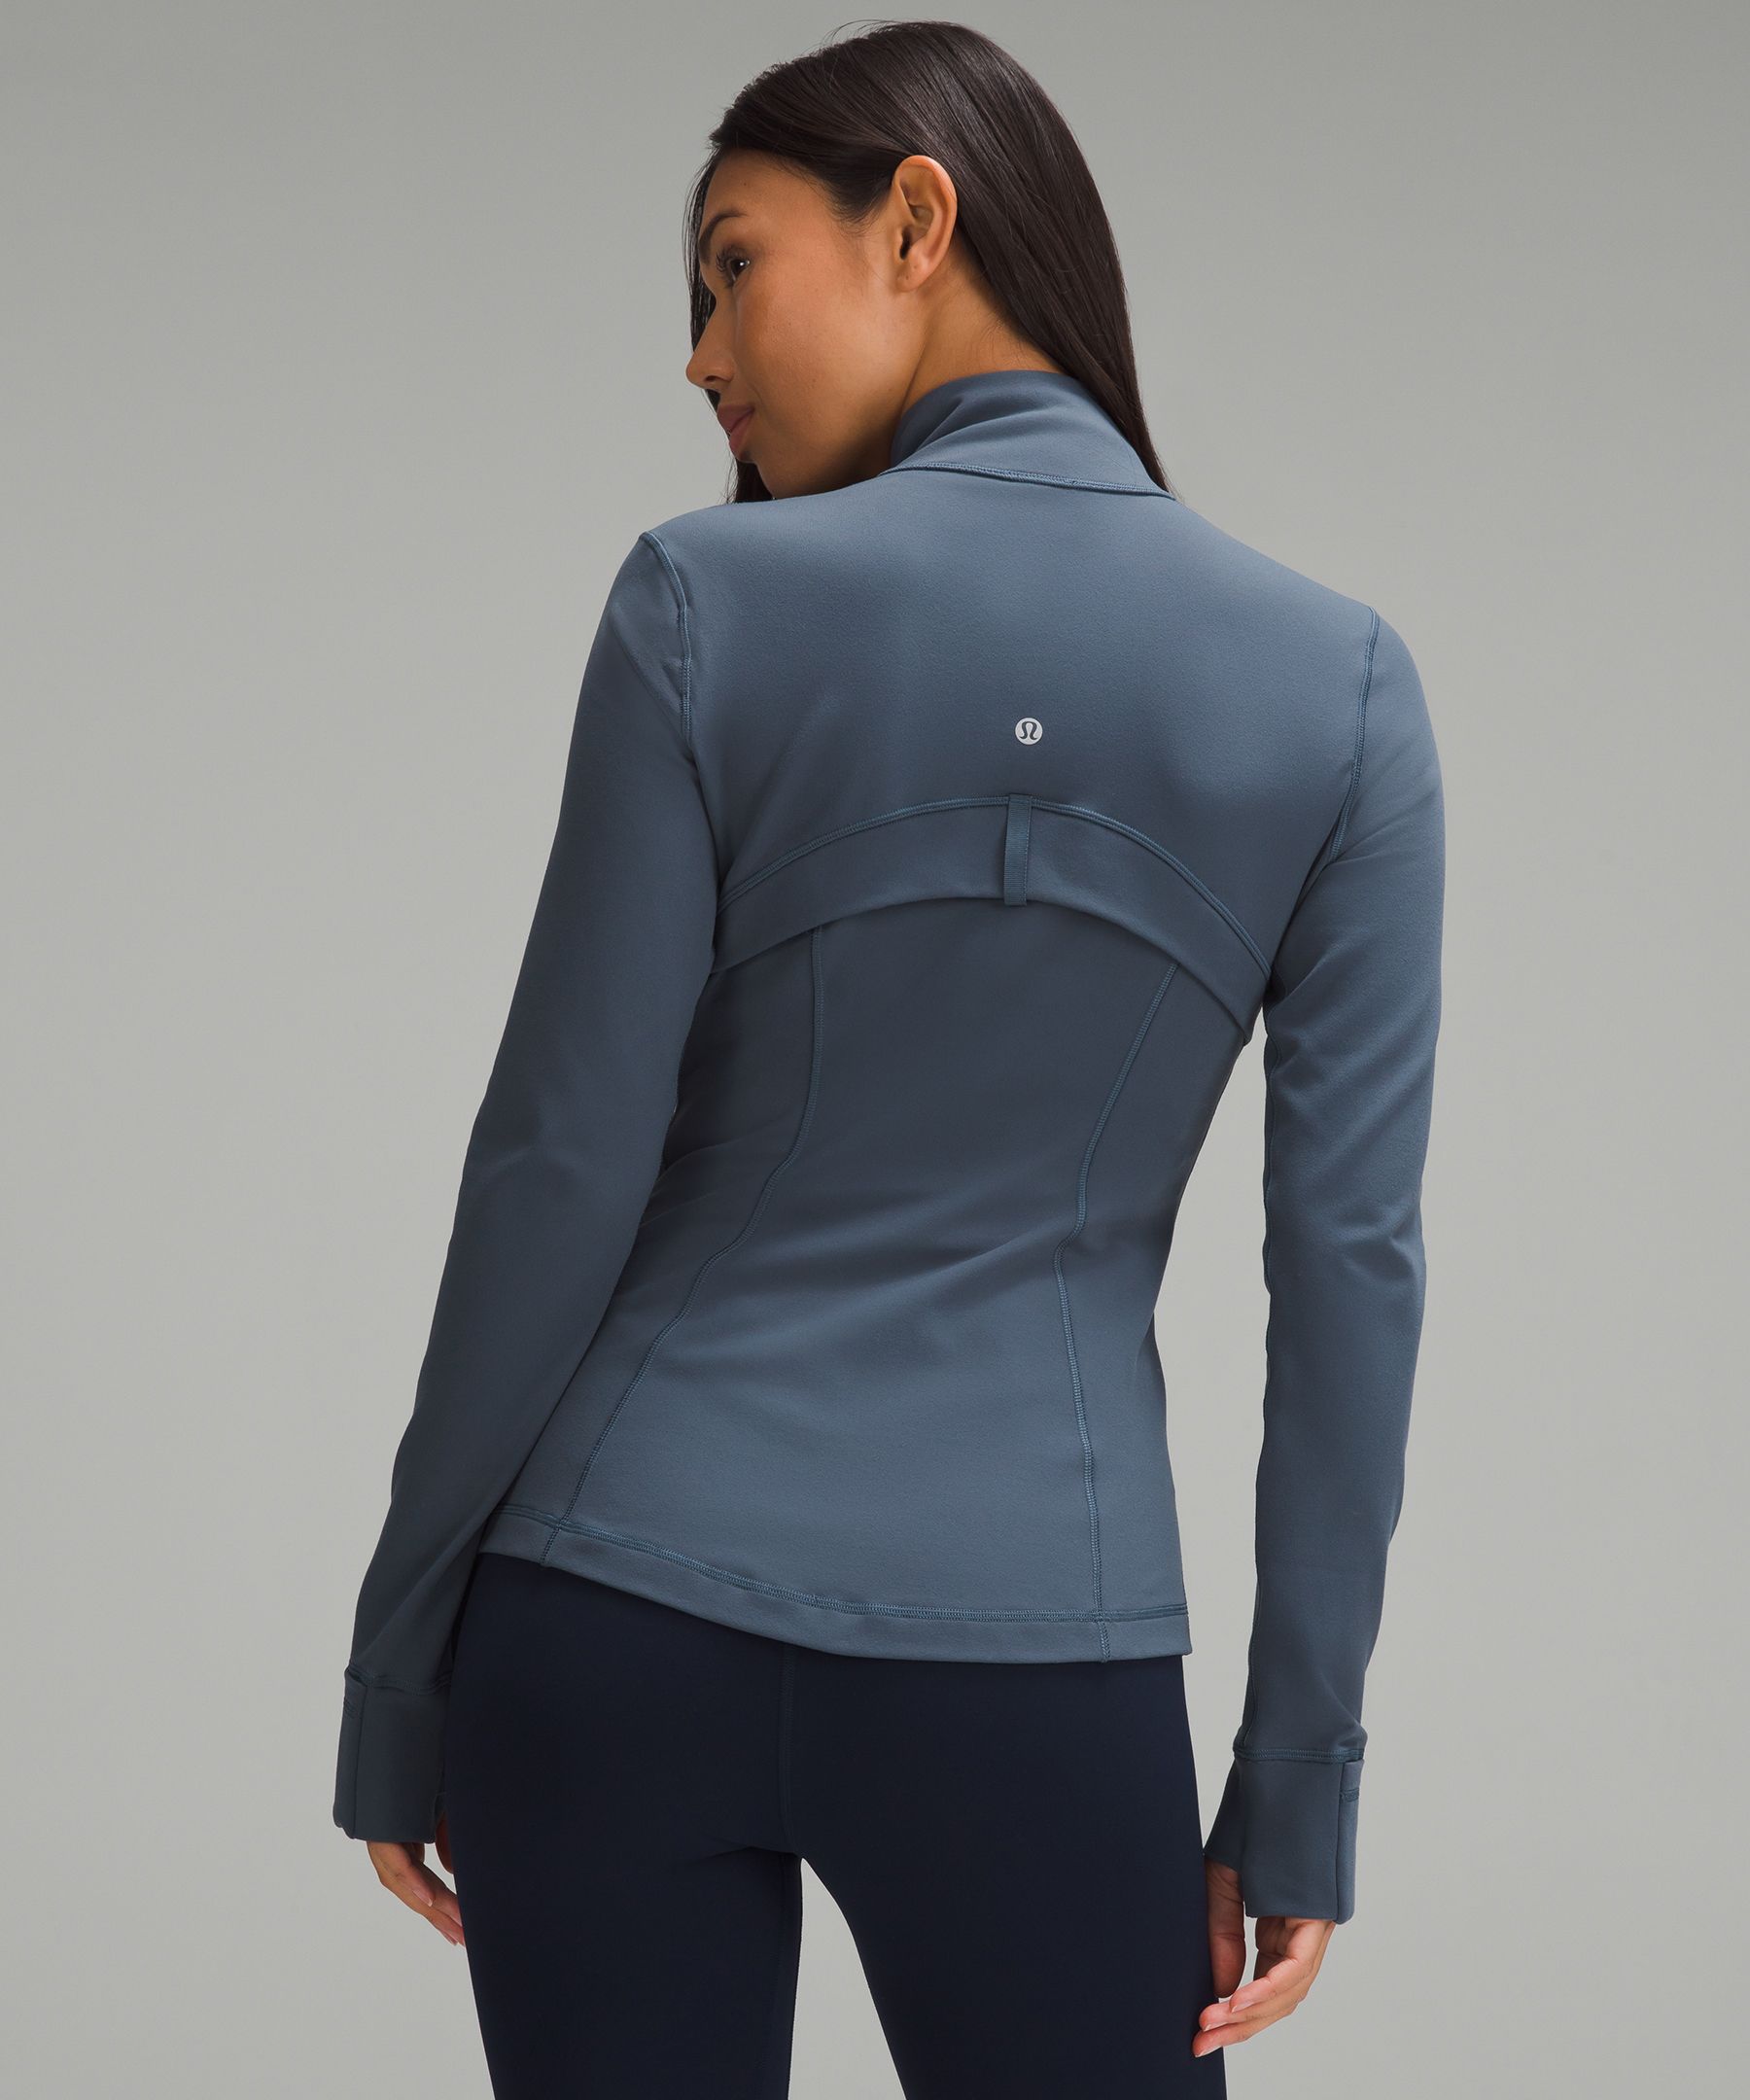 Lululemon athletica jacket - Athletic apparel